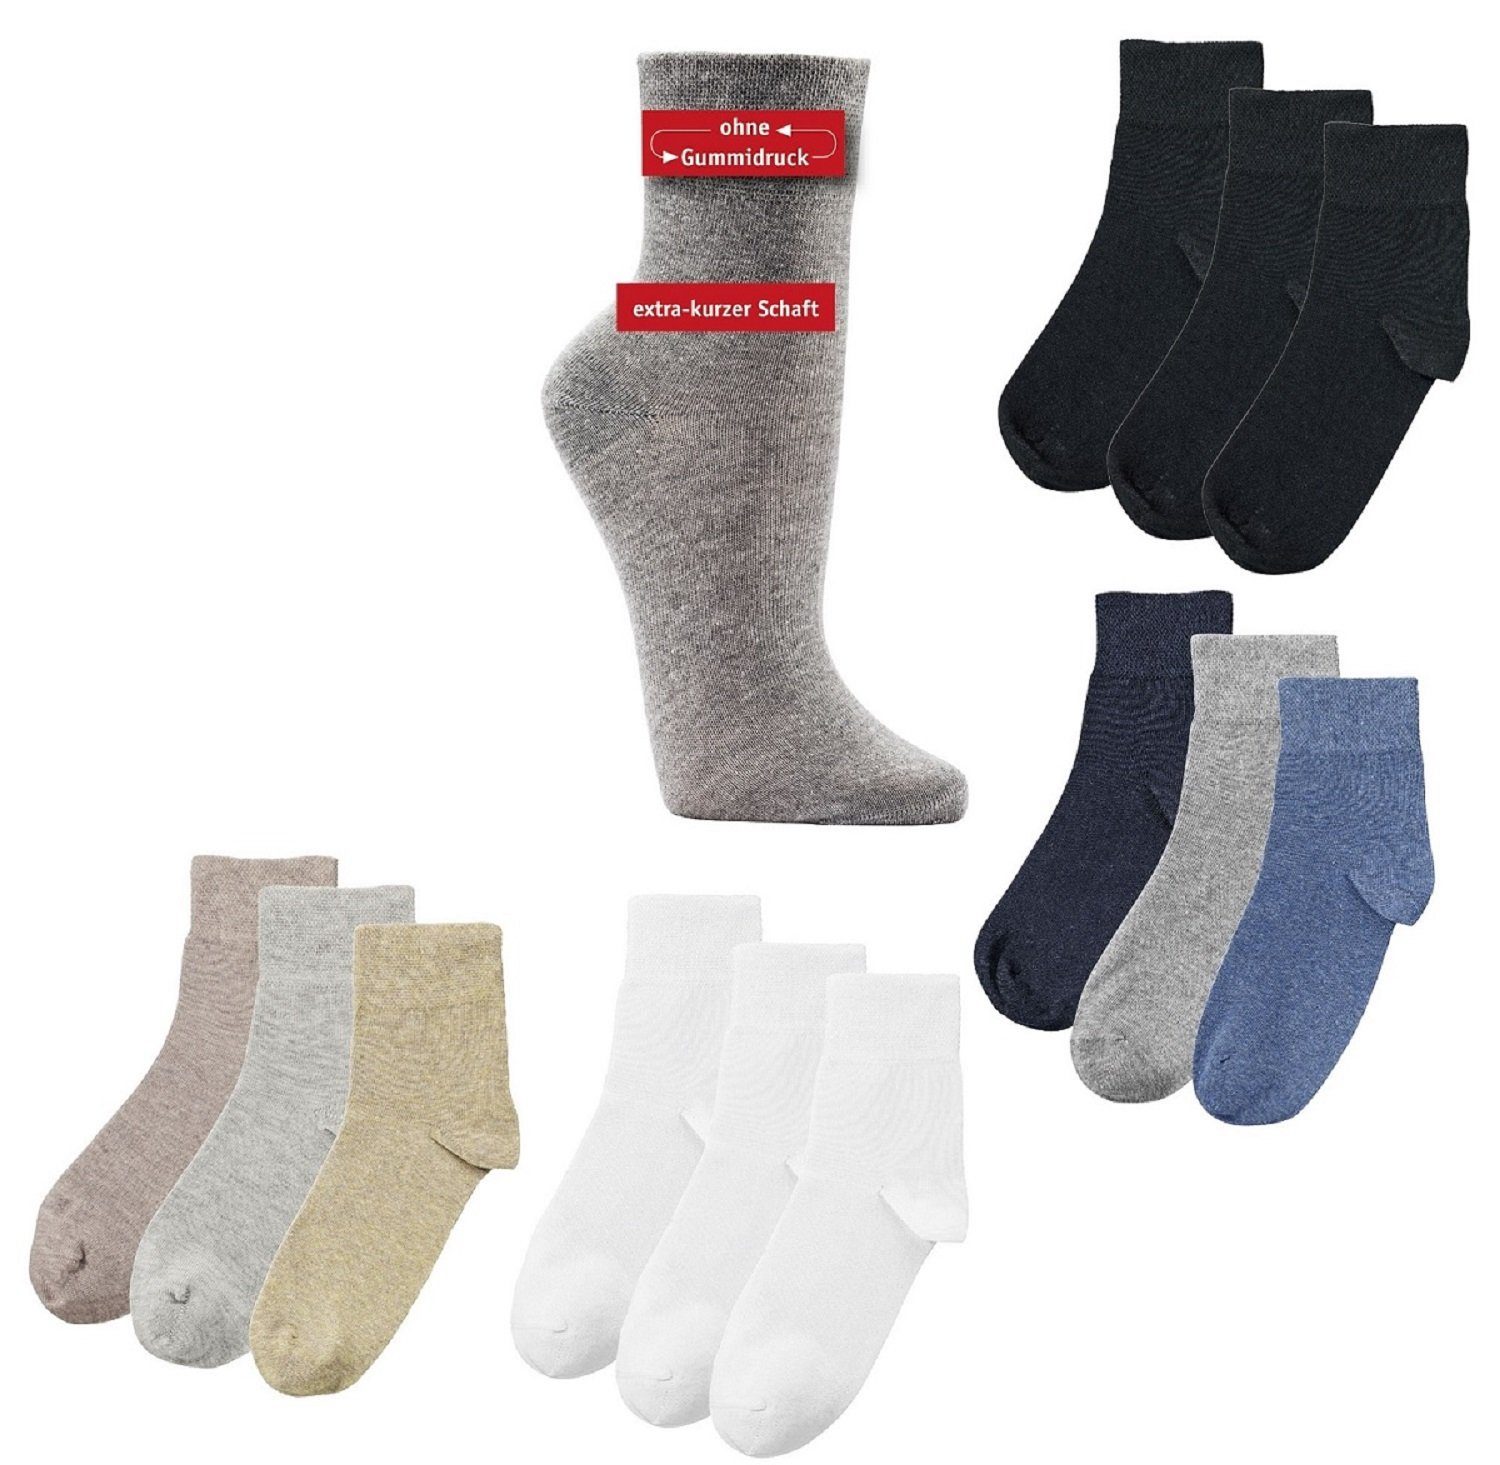 Socks 4 Fun Diabetikersocken Wellness Kurzschaft Baumwolle (3-Paar, 3 Paar) hell sortiert